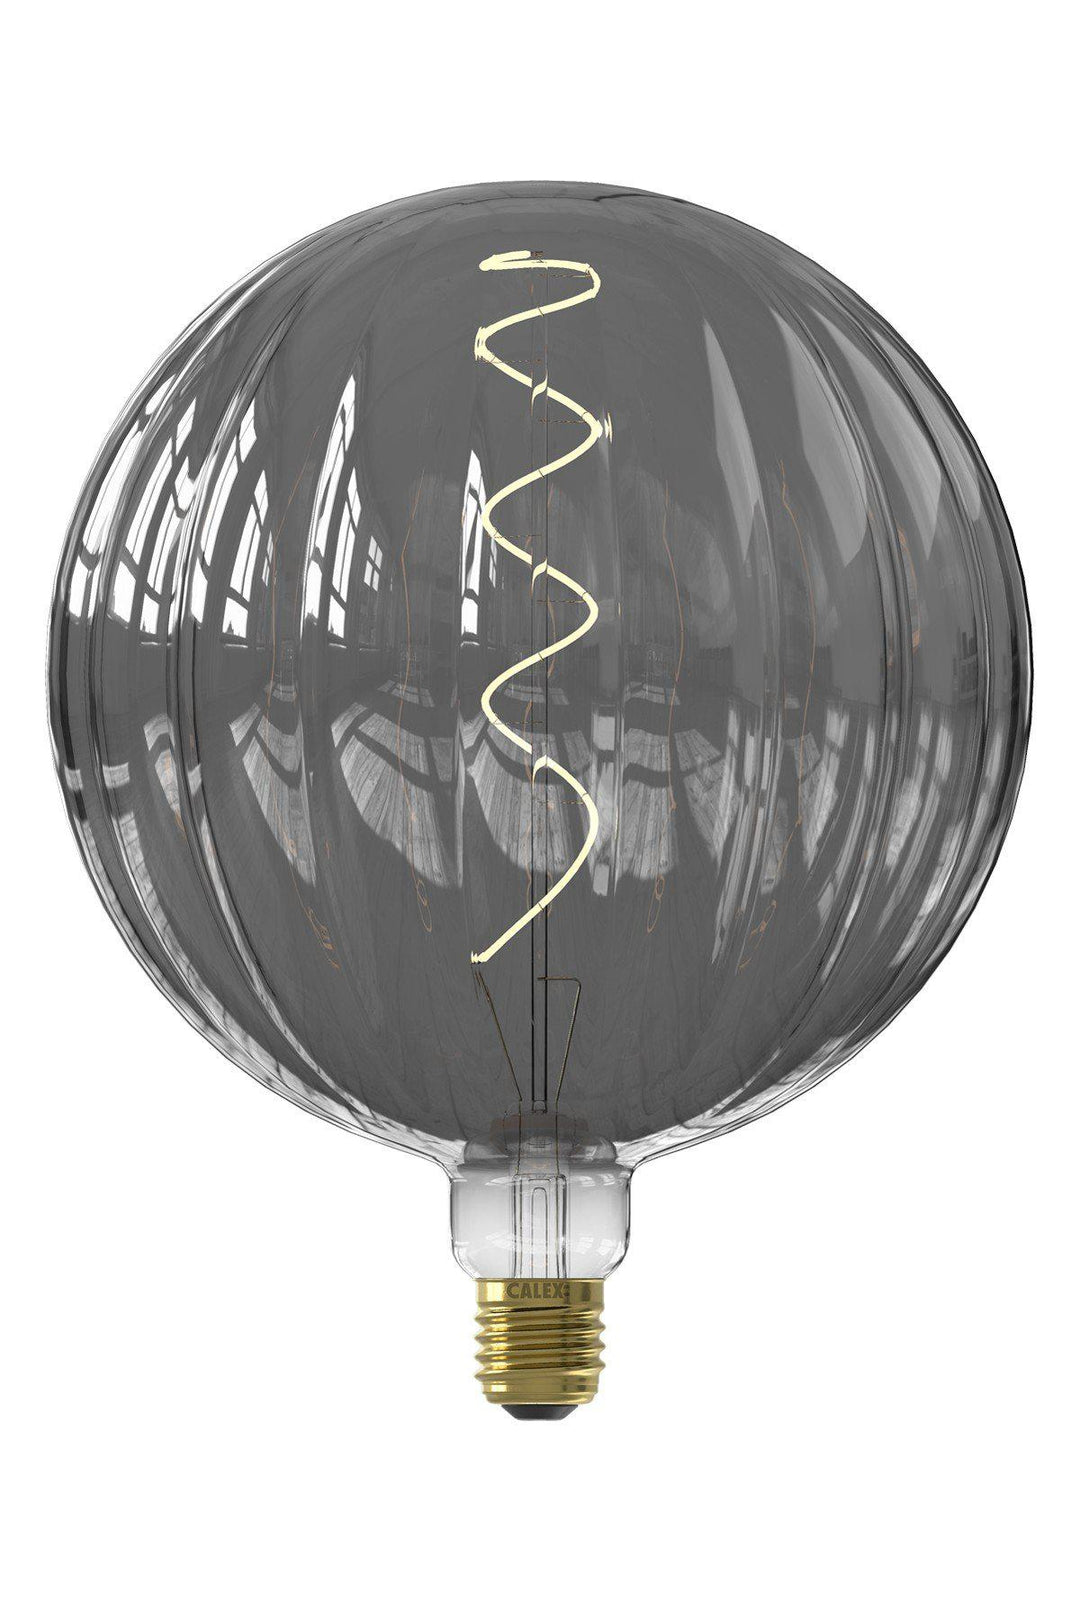 Calex 473879 LED Globe Crown Lamp, 3.5W, E27, Gold